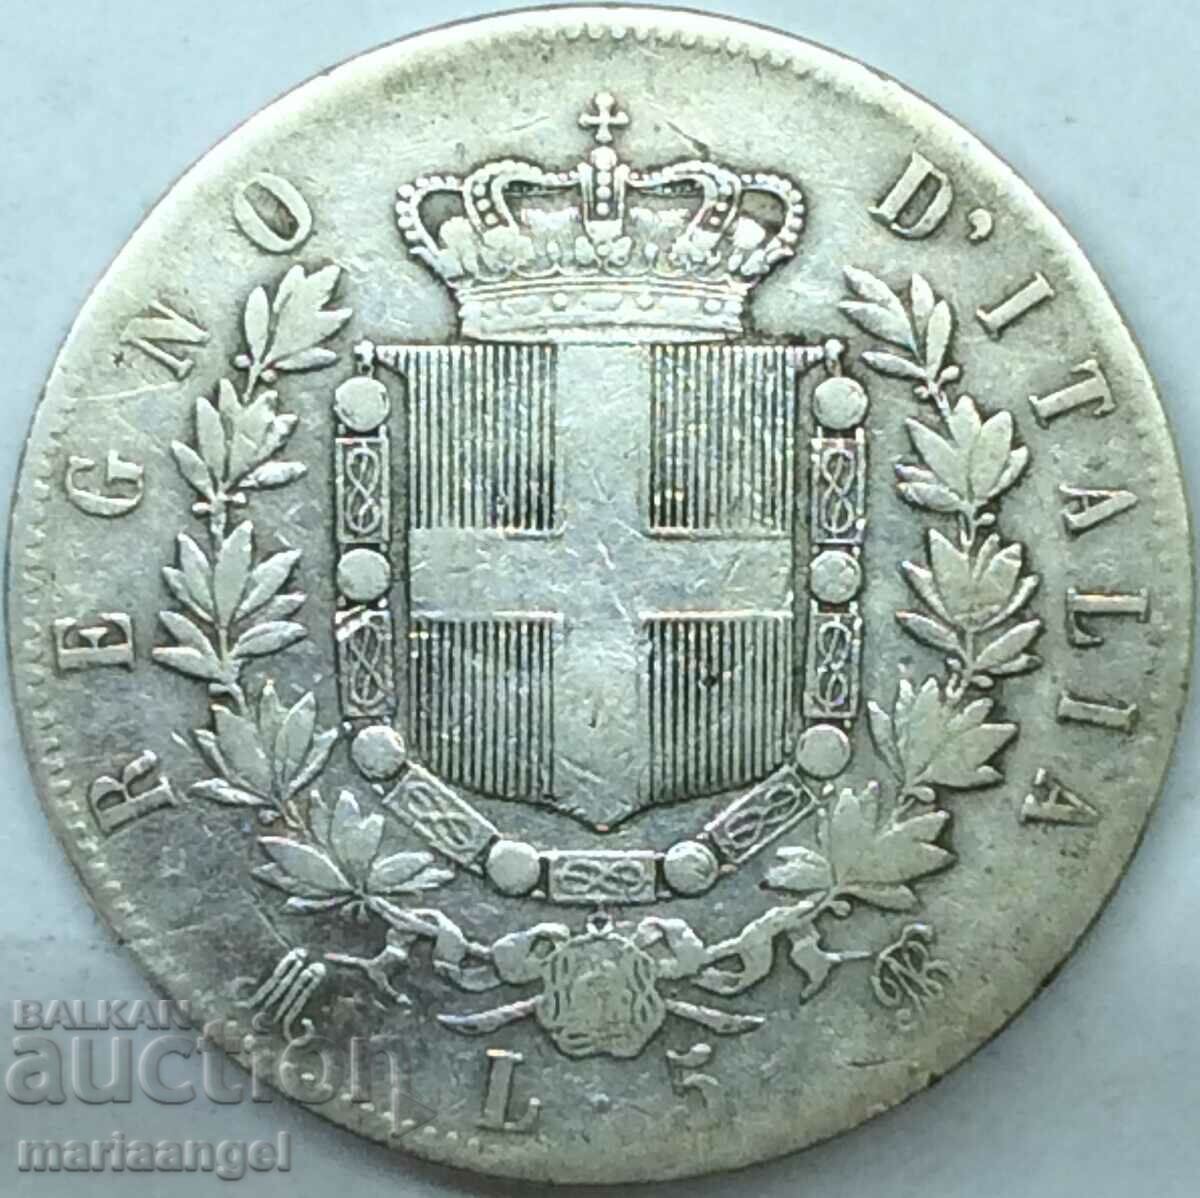 5 лири 1873 Италия Талер 24,68г 37мм сребро